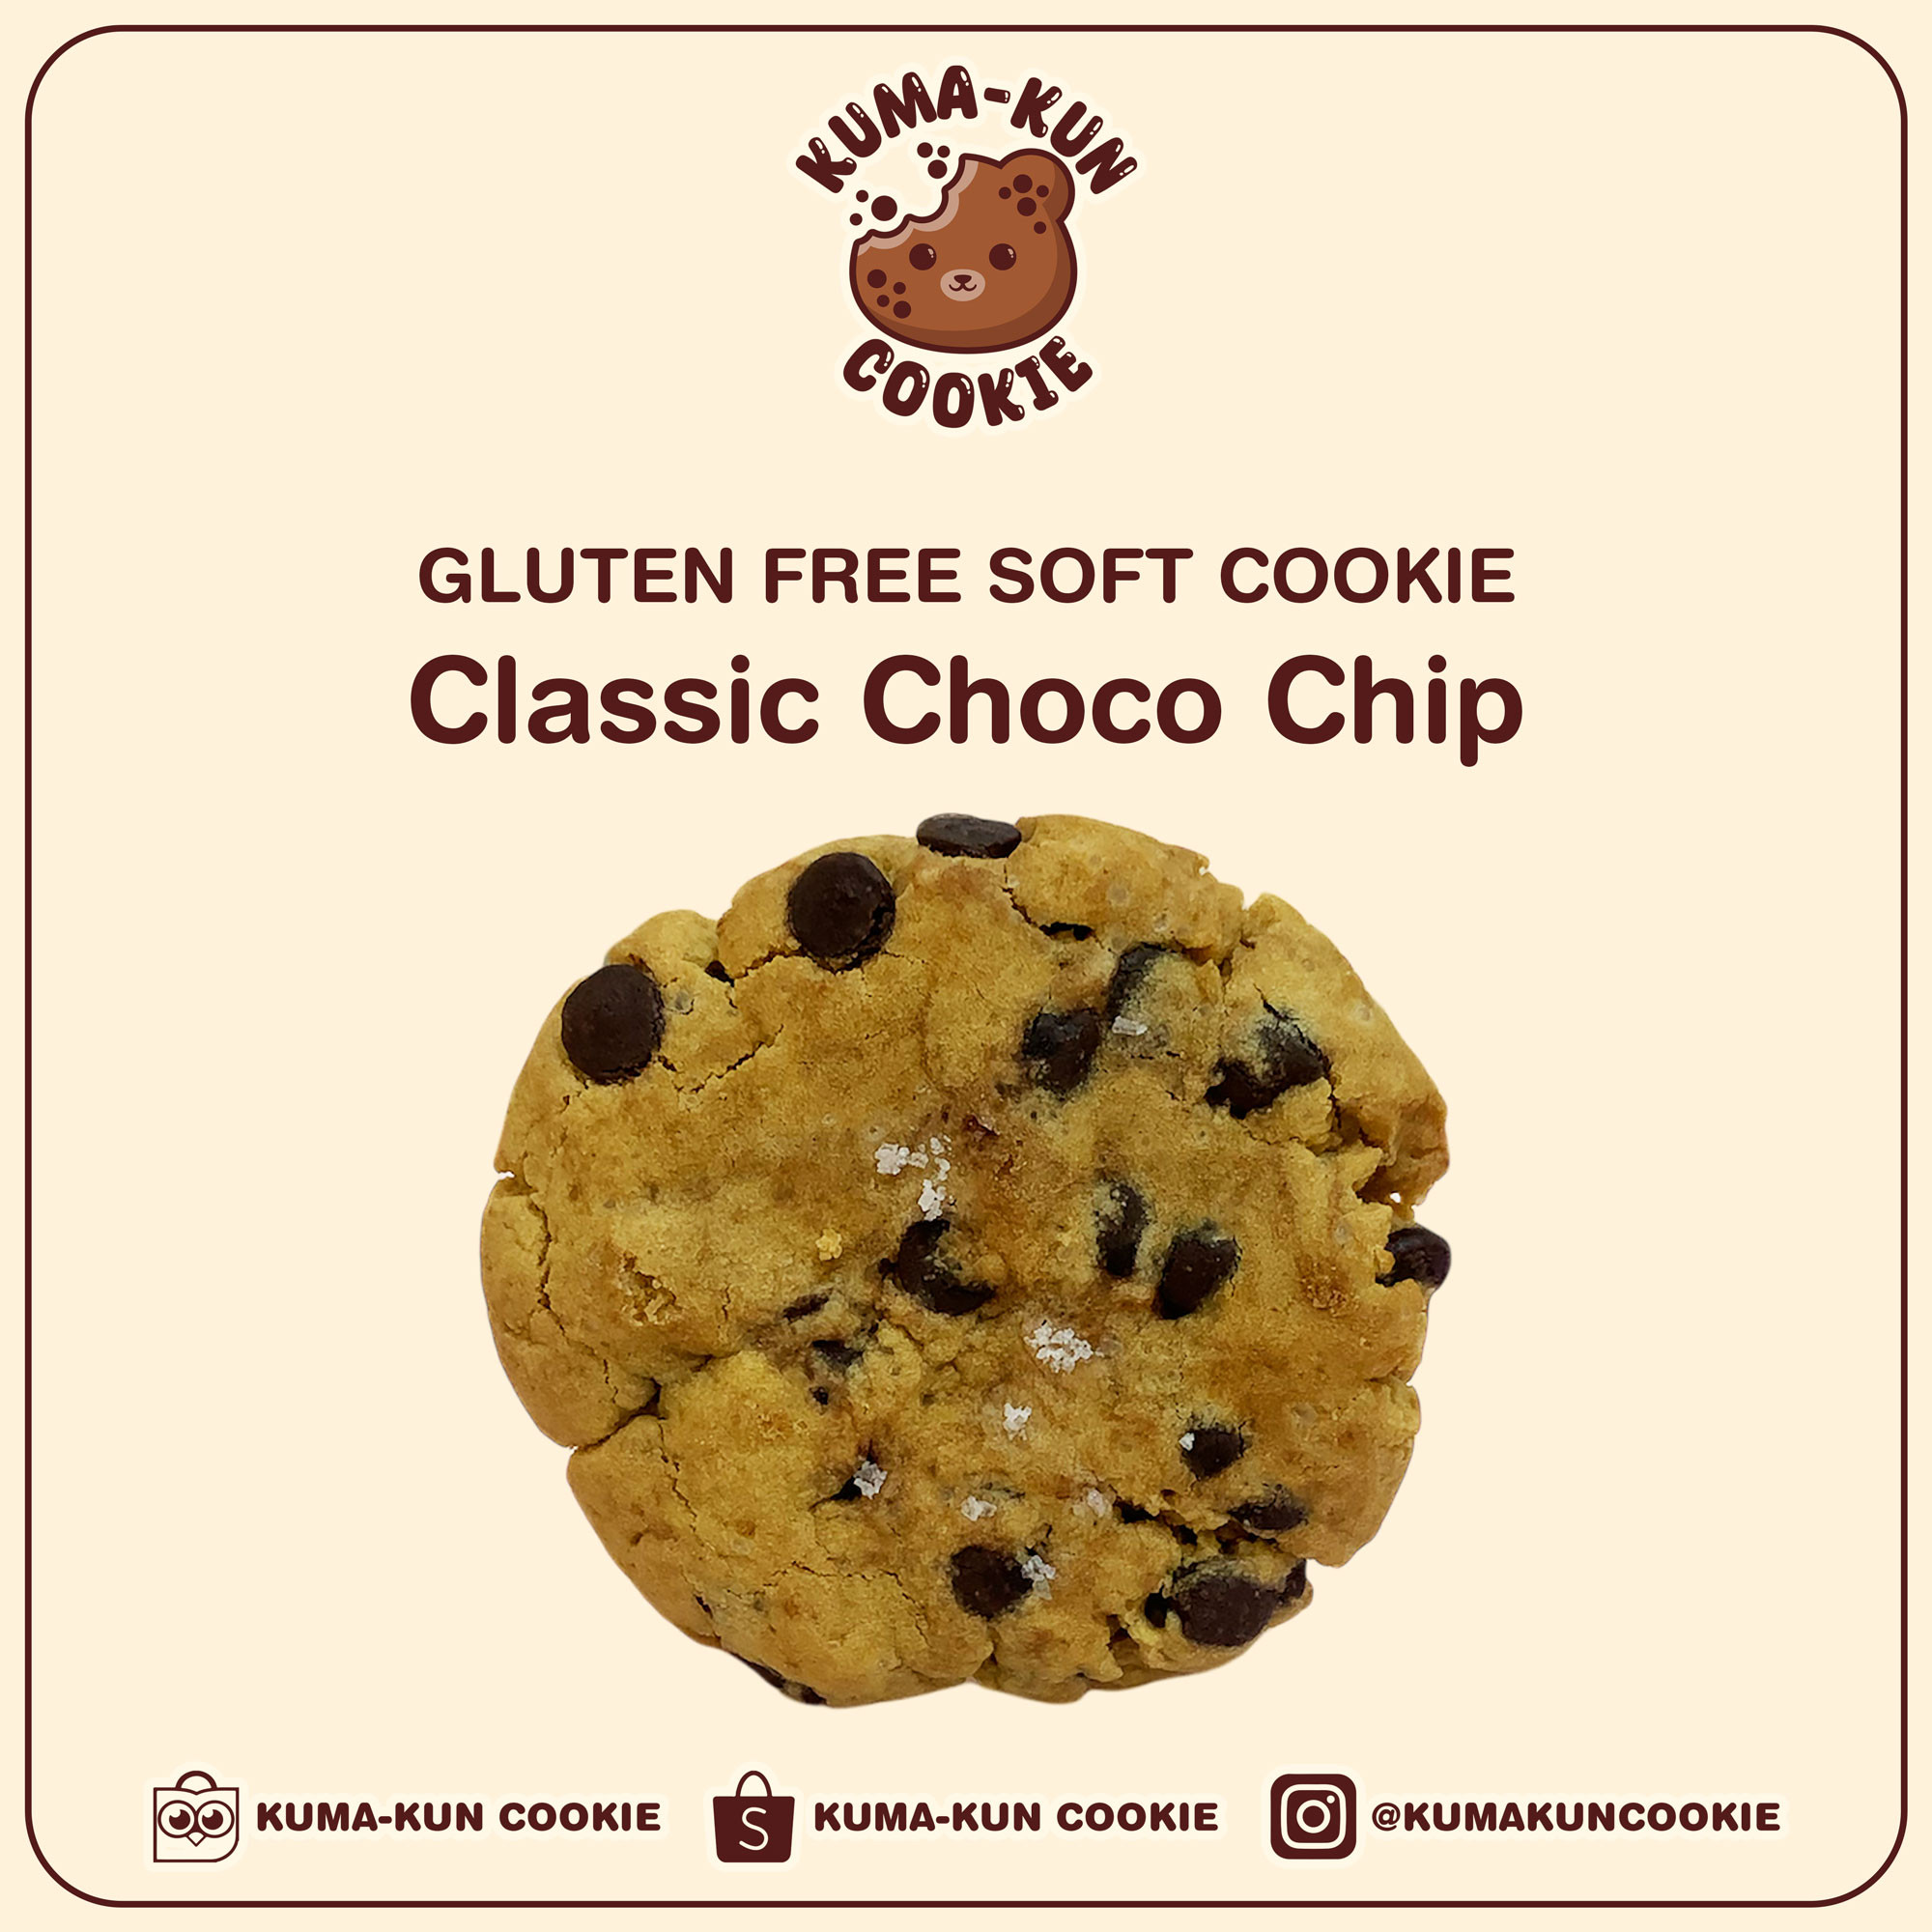 Gluten Free Soft Cookie - Classic Choco Chip